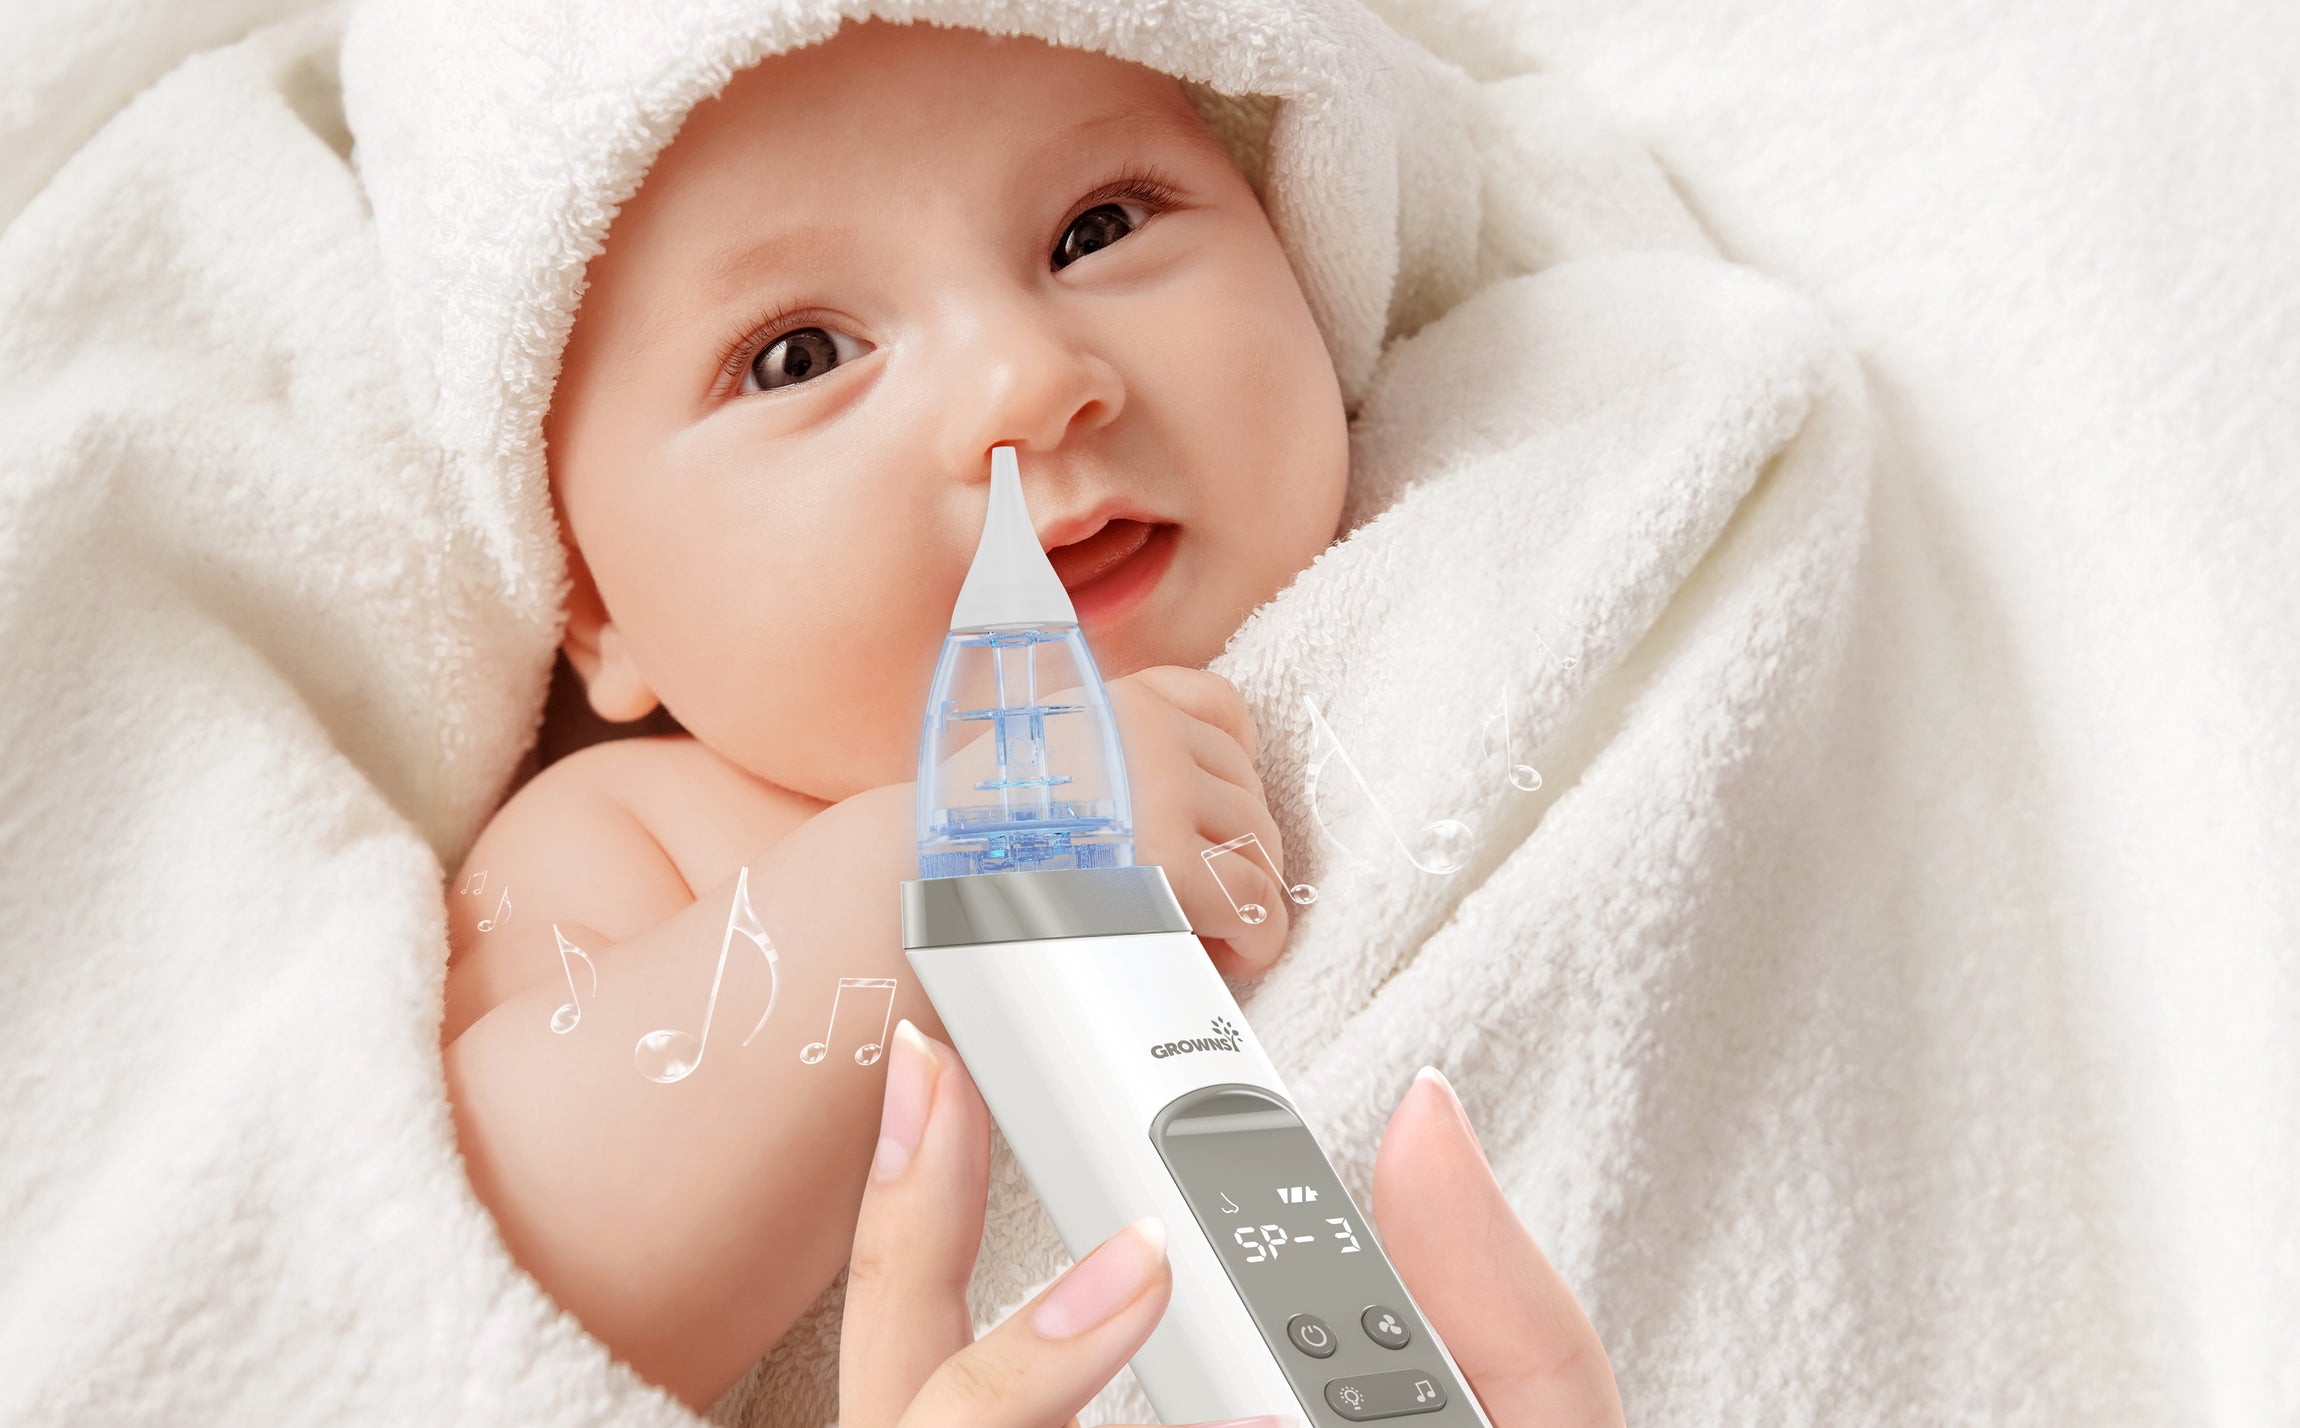 GRPWNSY Baby Manual Nasal Aspirator – GROWNSY